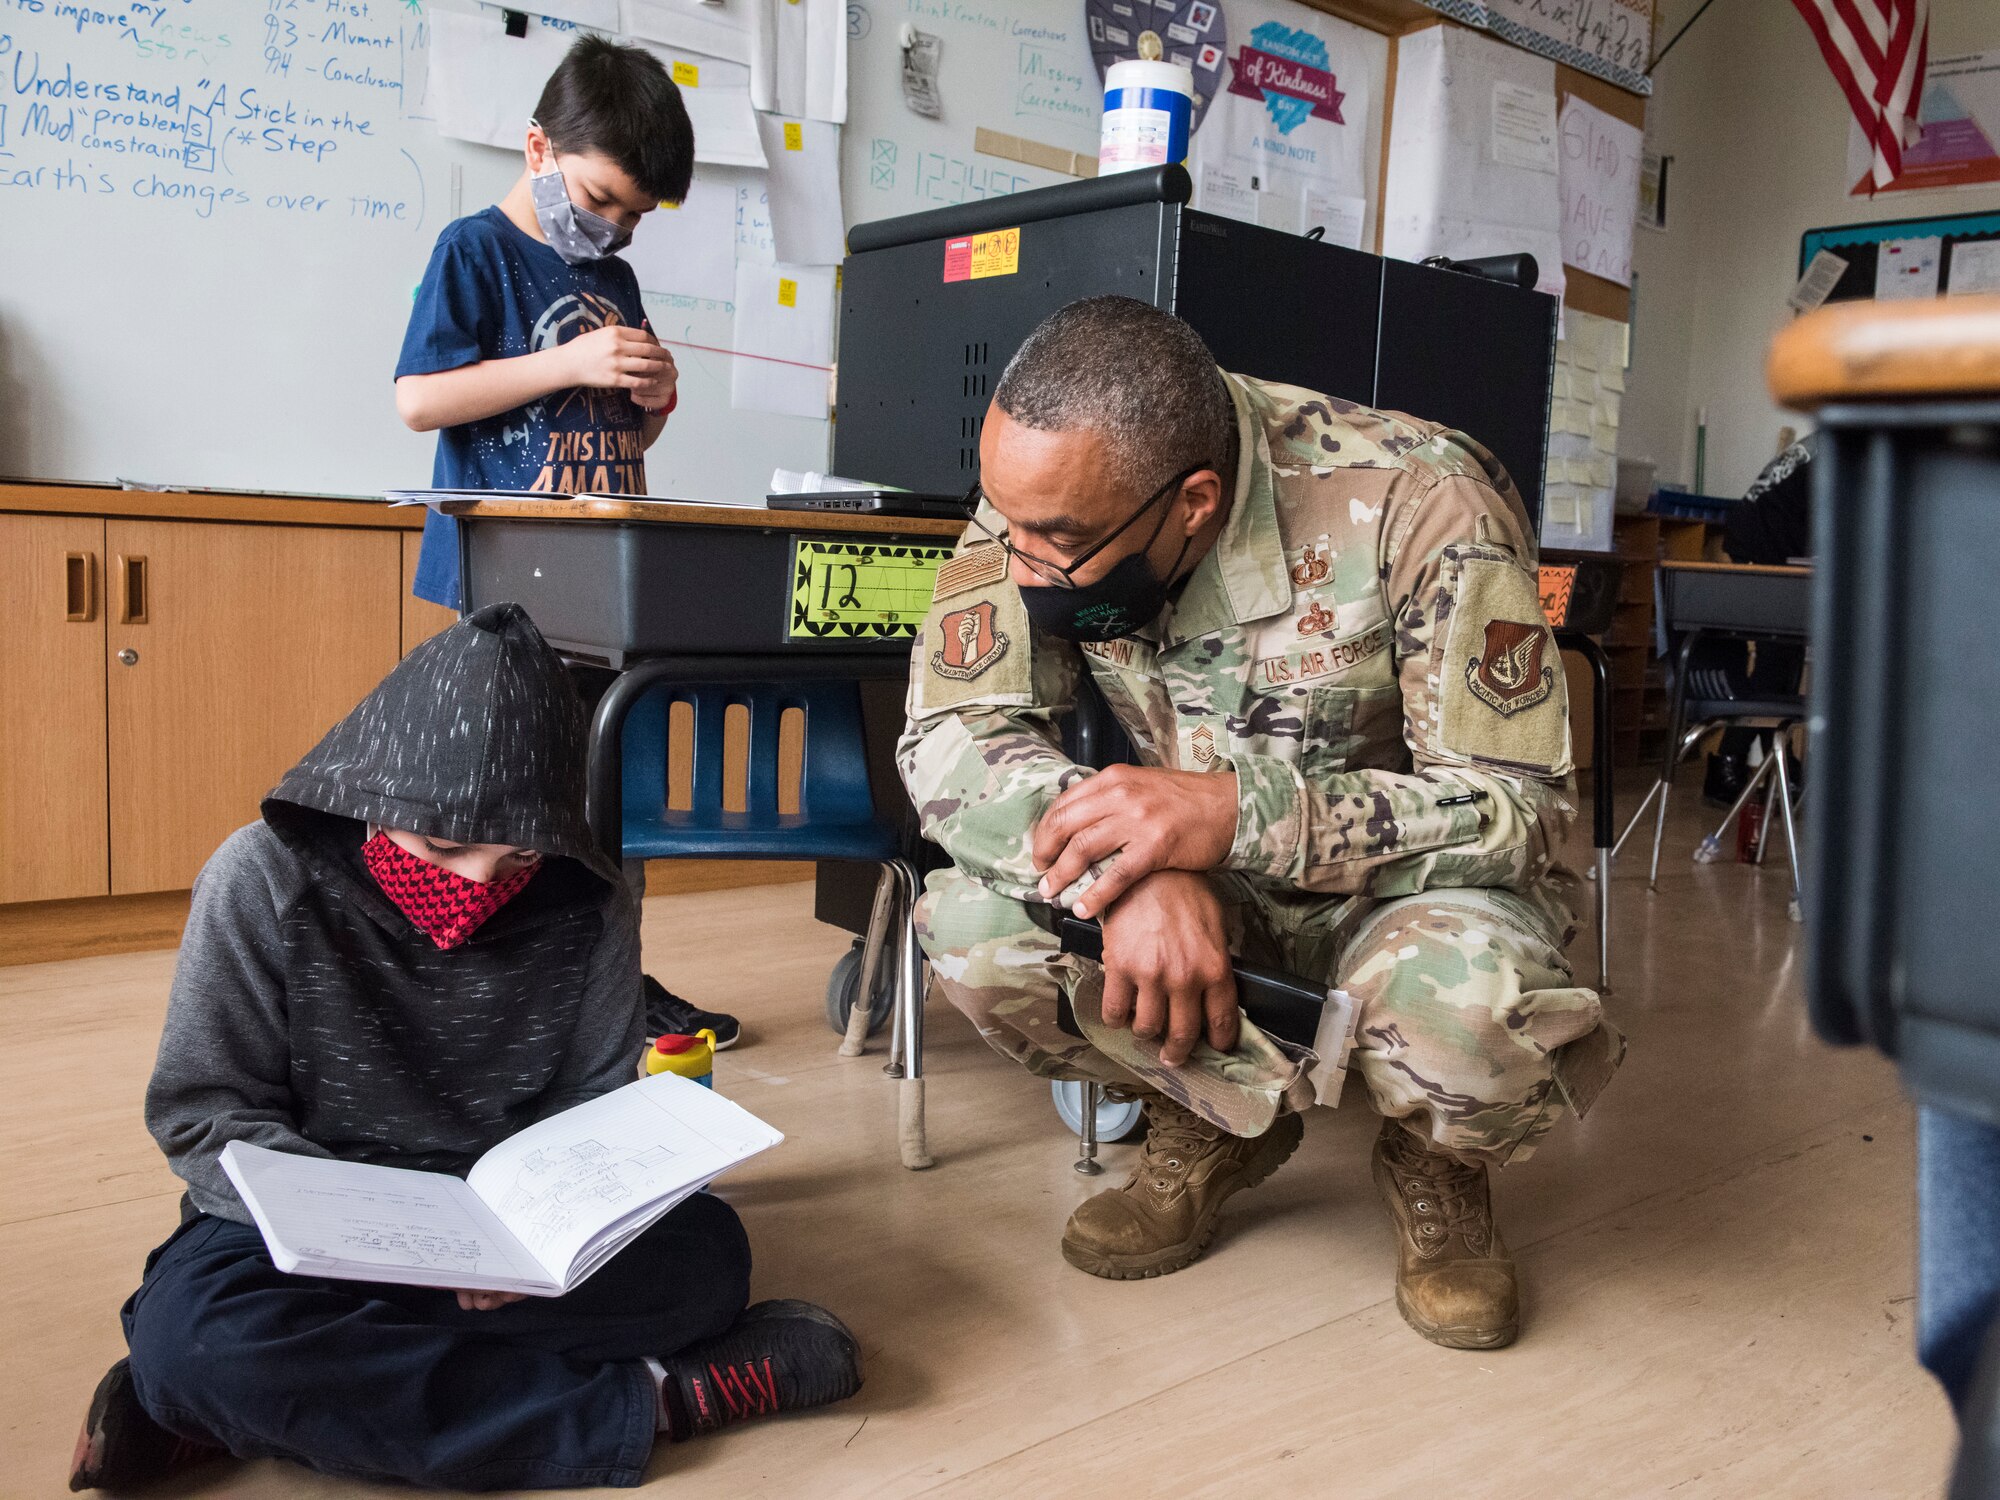 Man in uniform kneels down next to child reading notebook